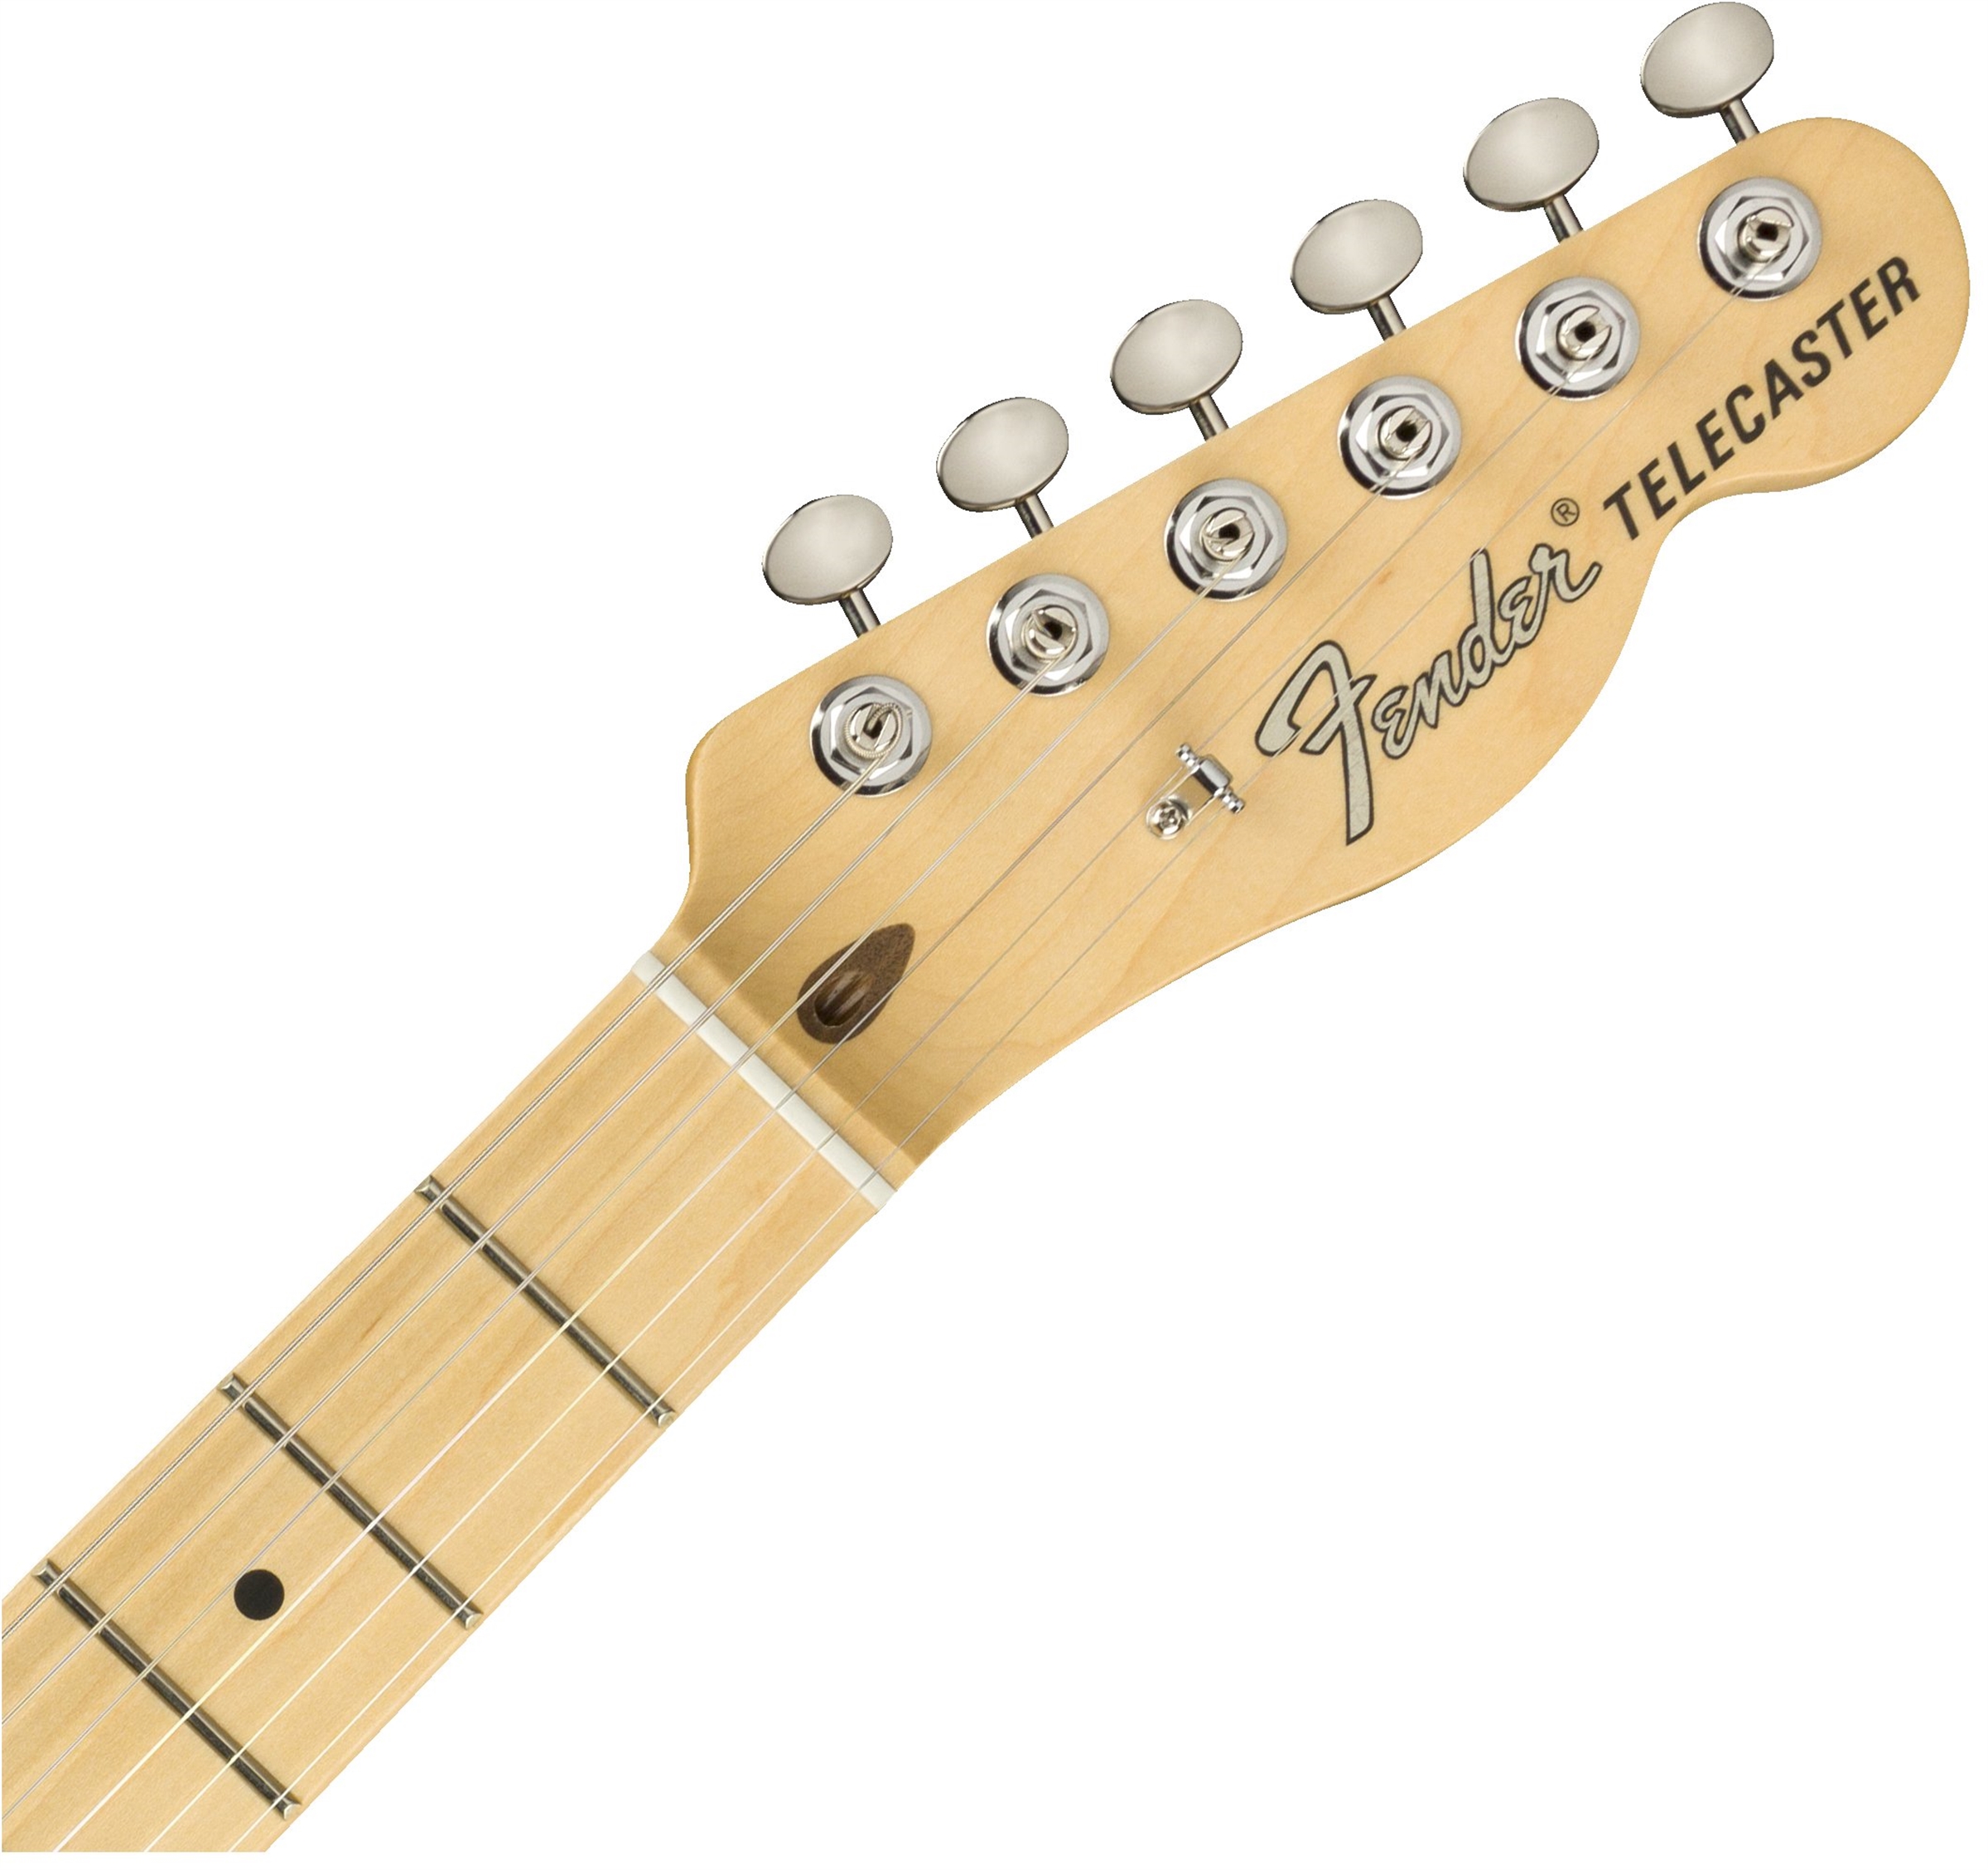 Fender Tele American Performer Usa Mn - Vintage White - Guitarra eléctrica con forma de tel - Variation 4